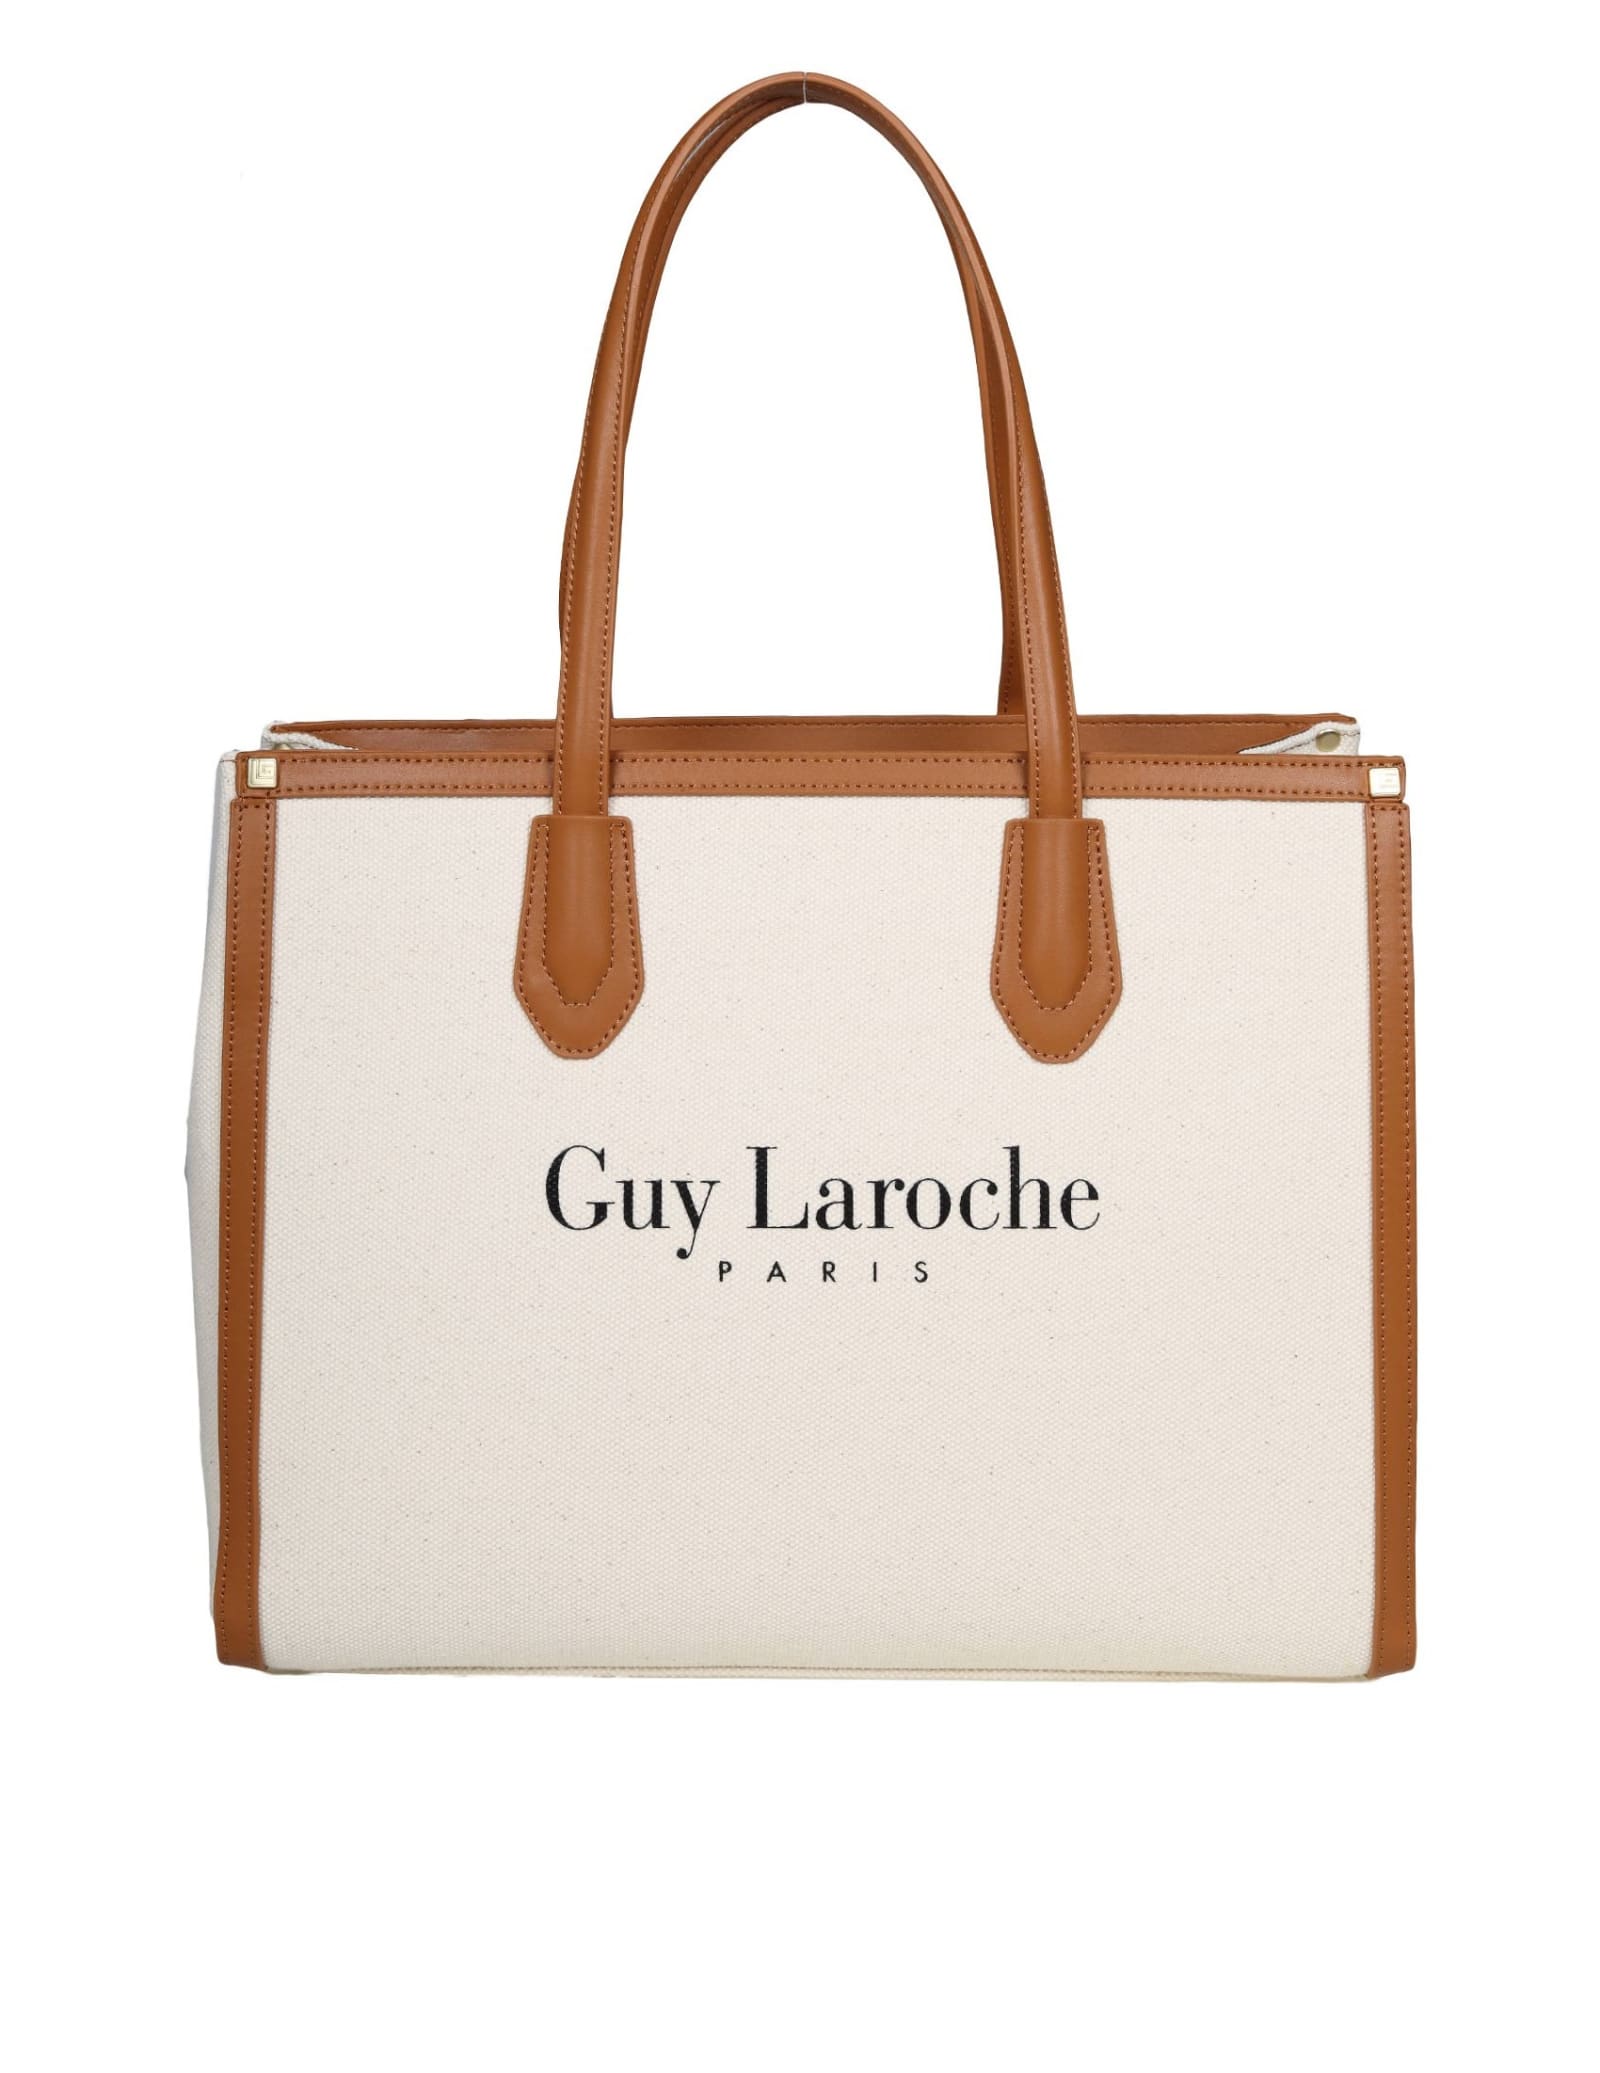 guy laroche hand bag